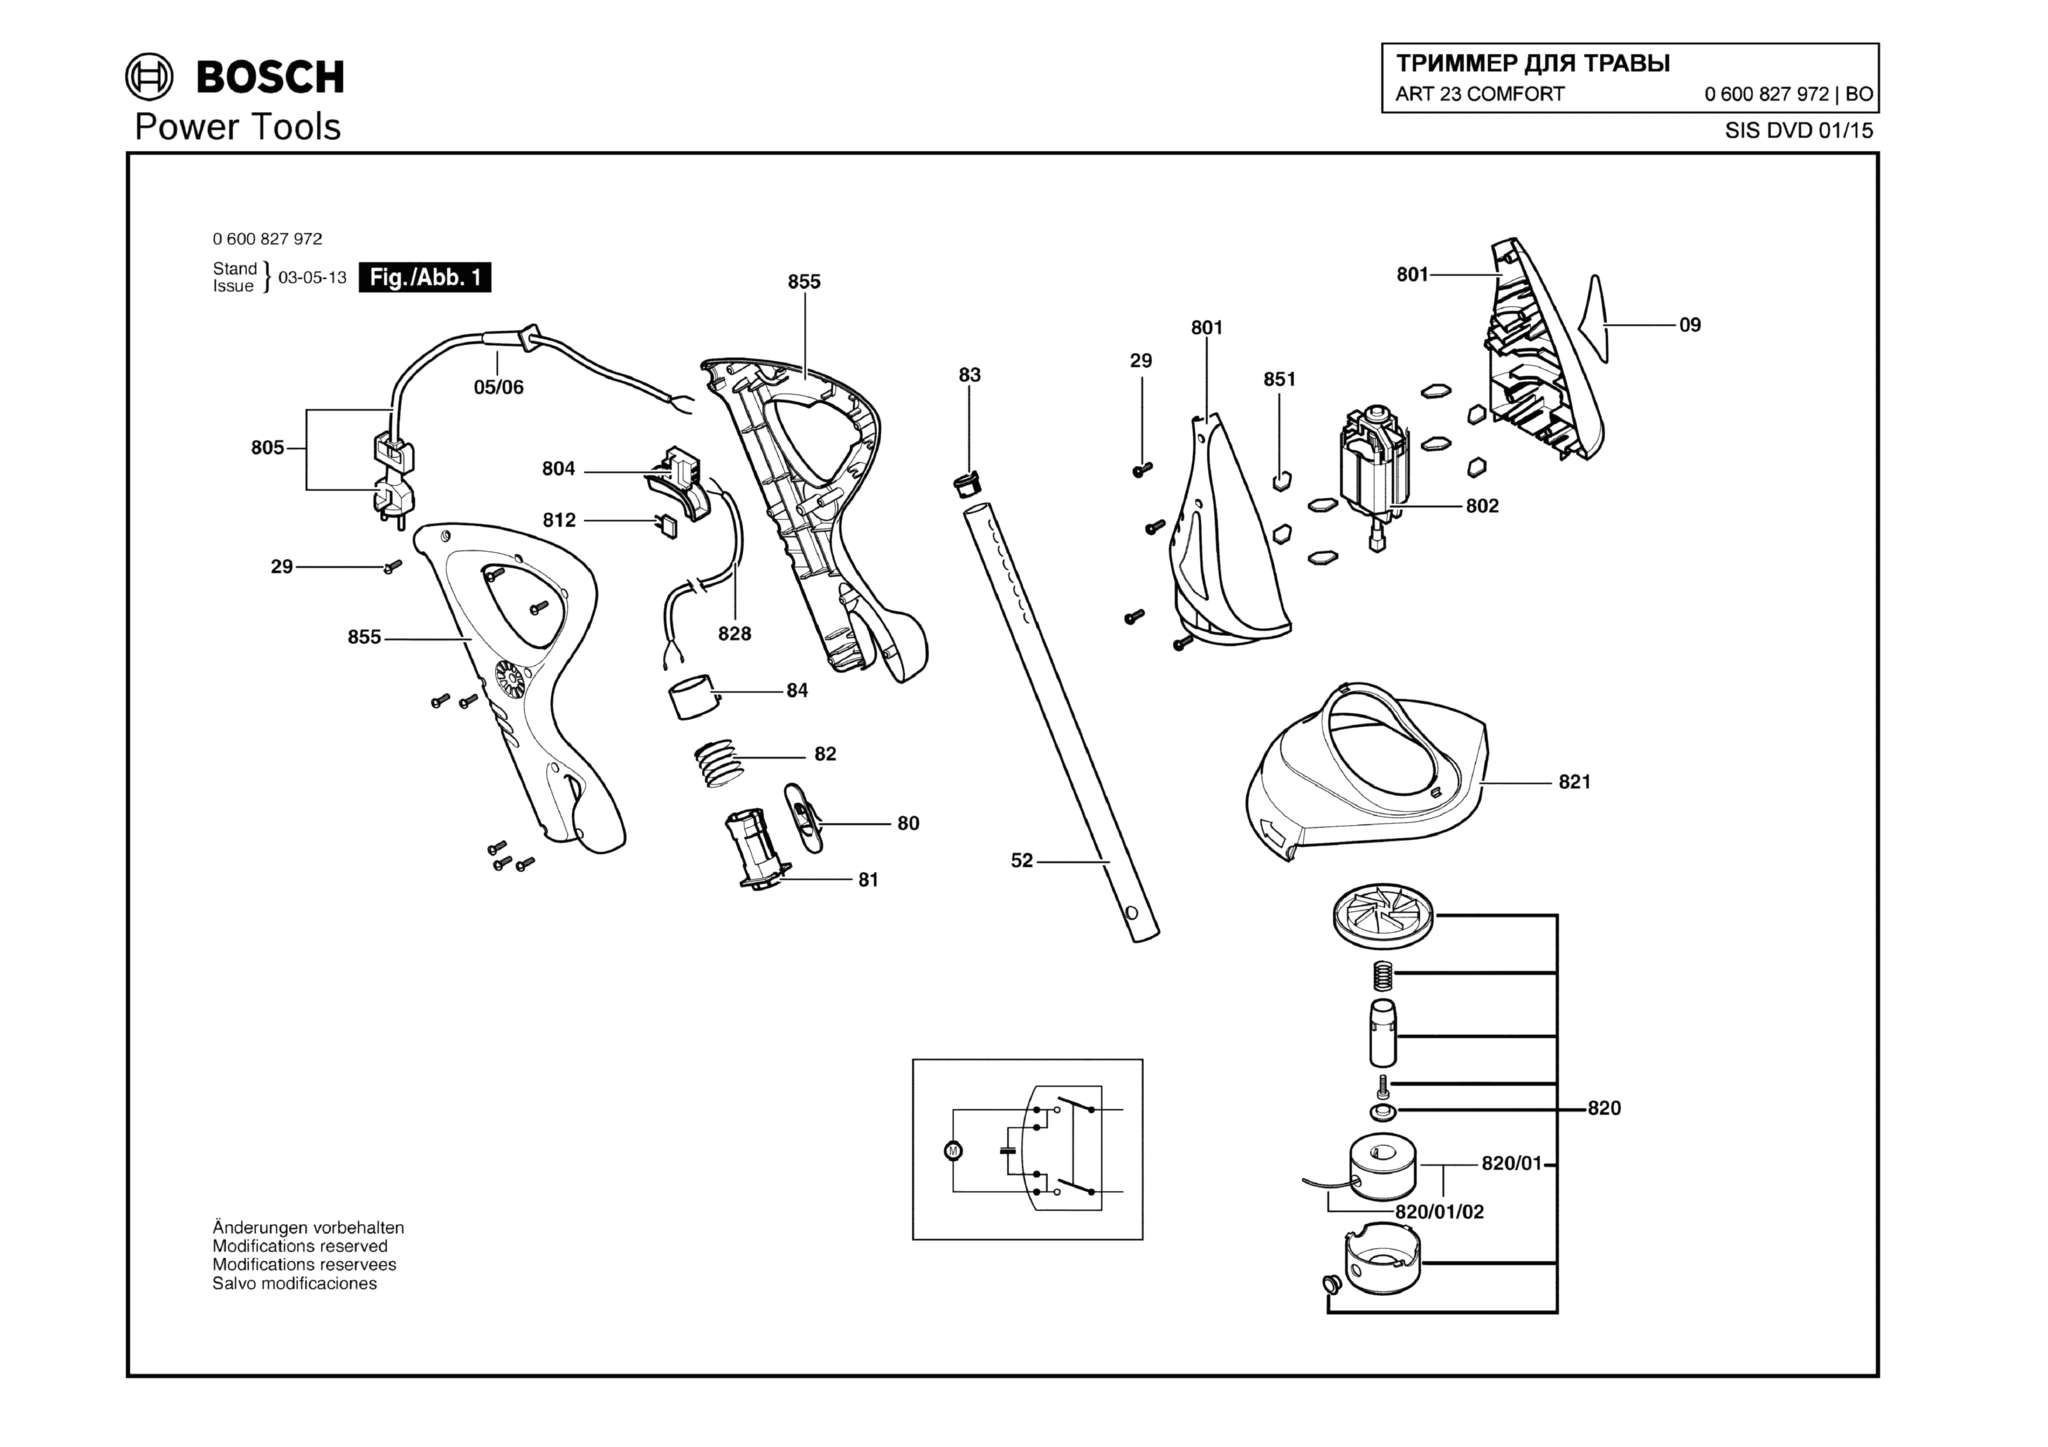 Запчасти, схема и деталировка Bosch ART 23 COMFORT (ТИП 0600827972)